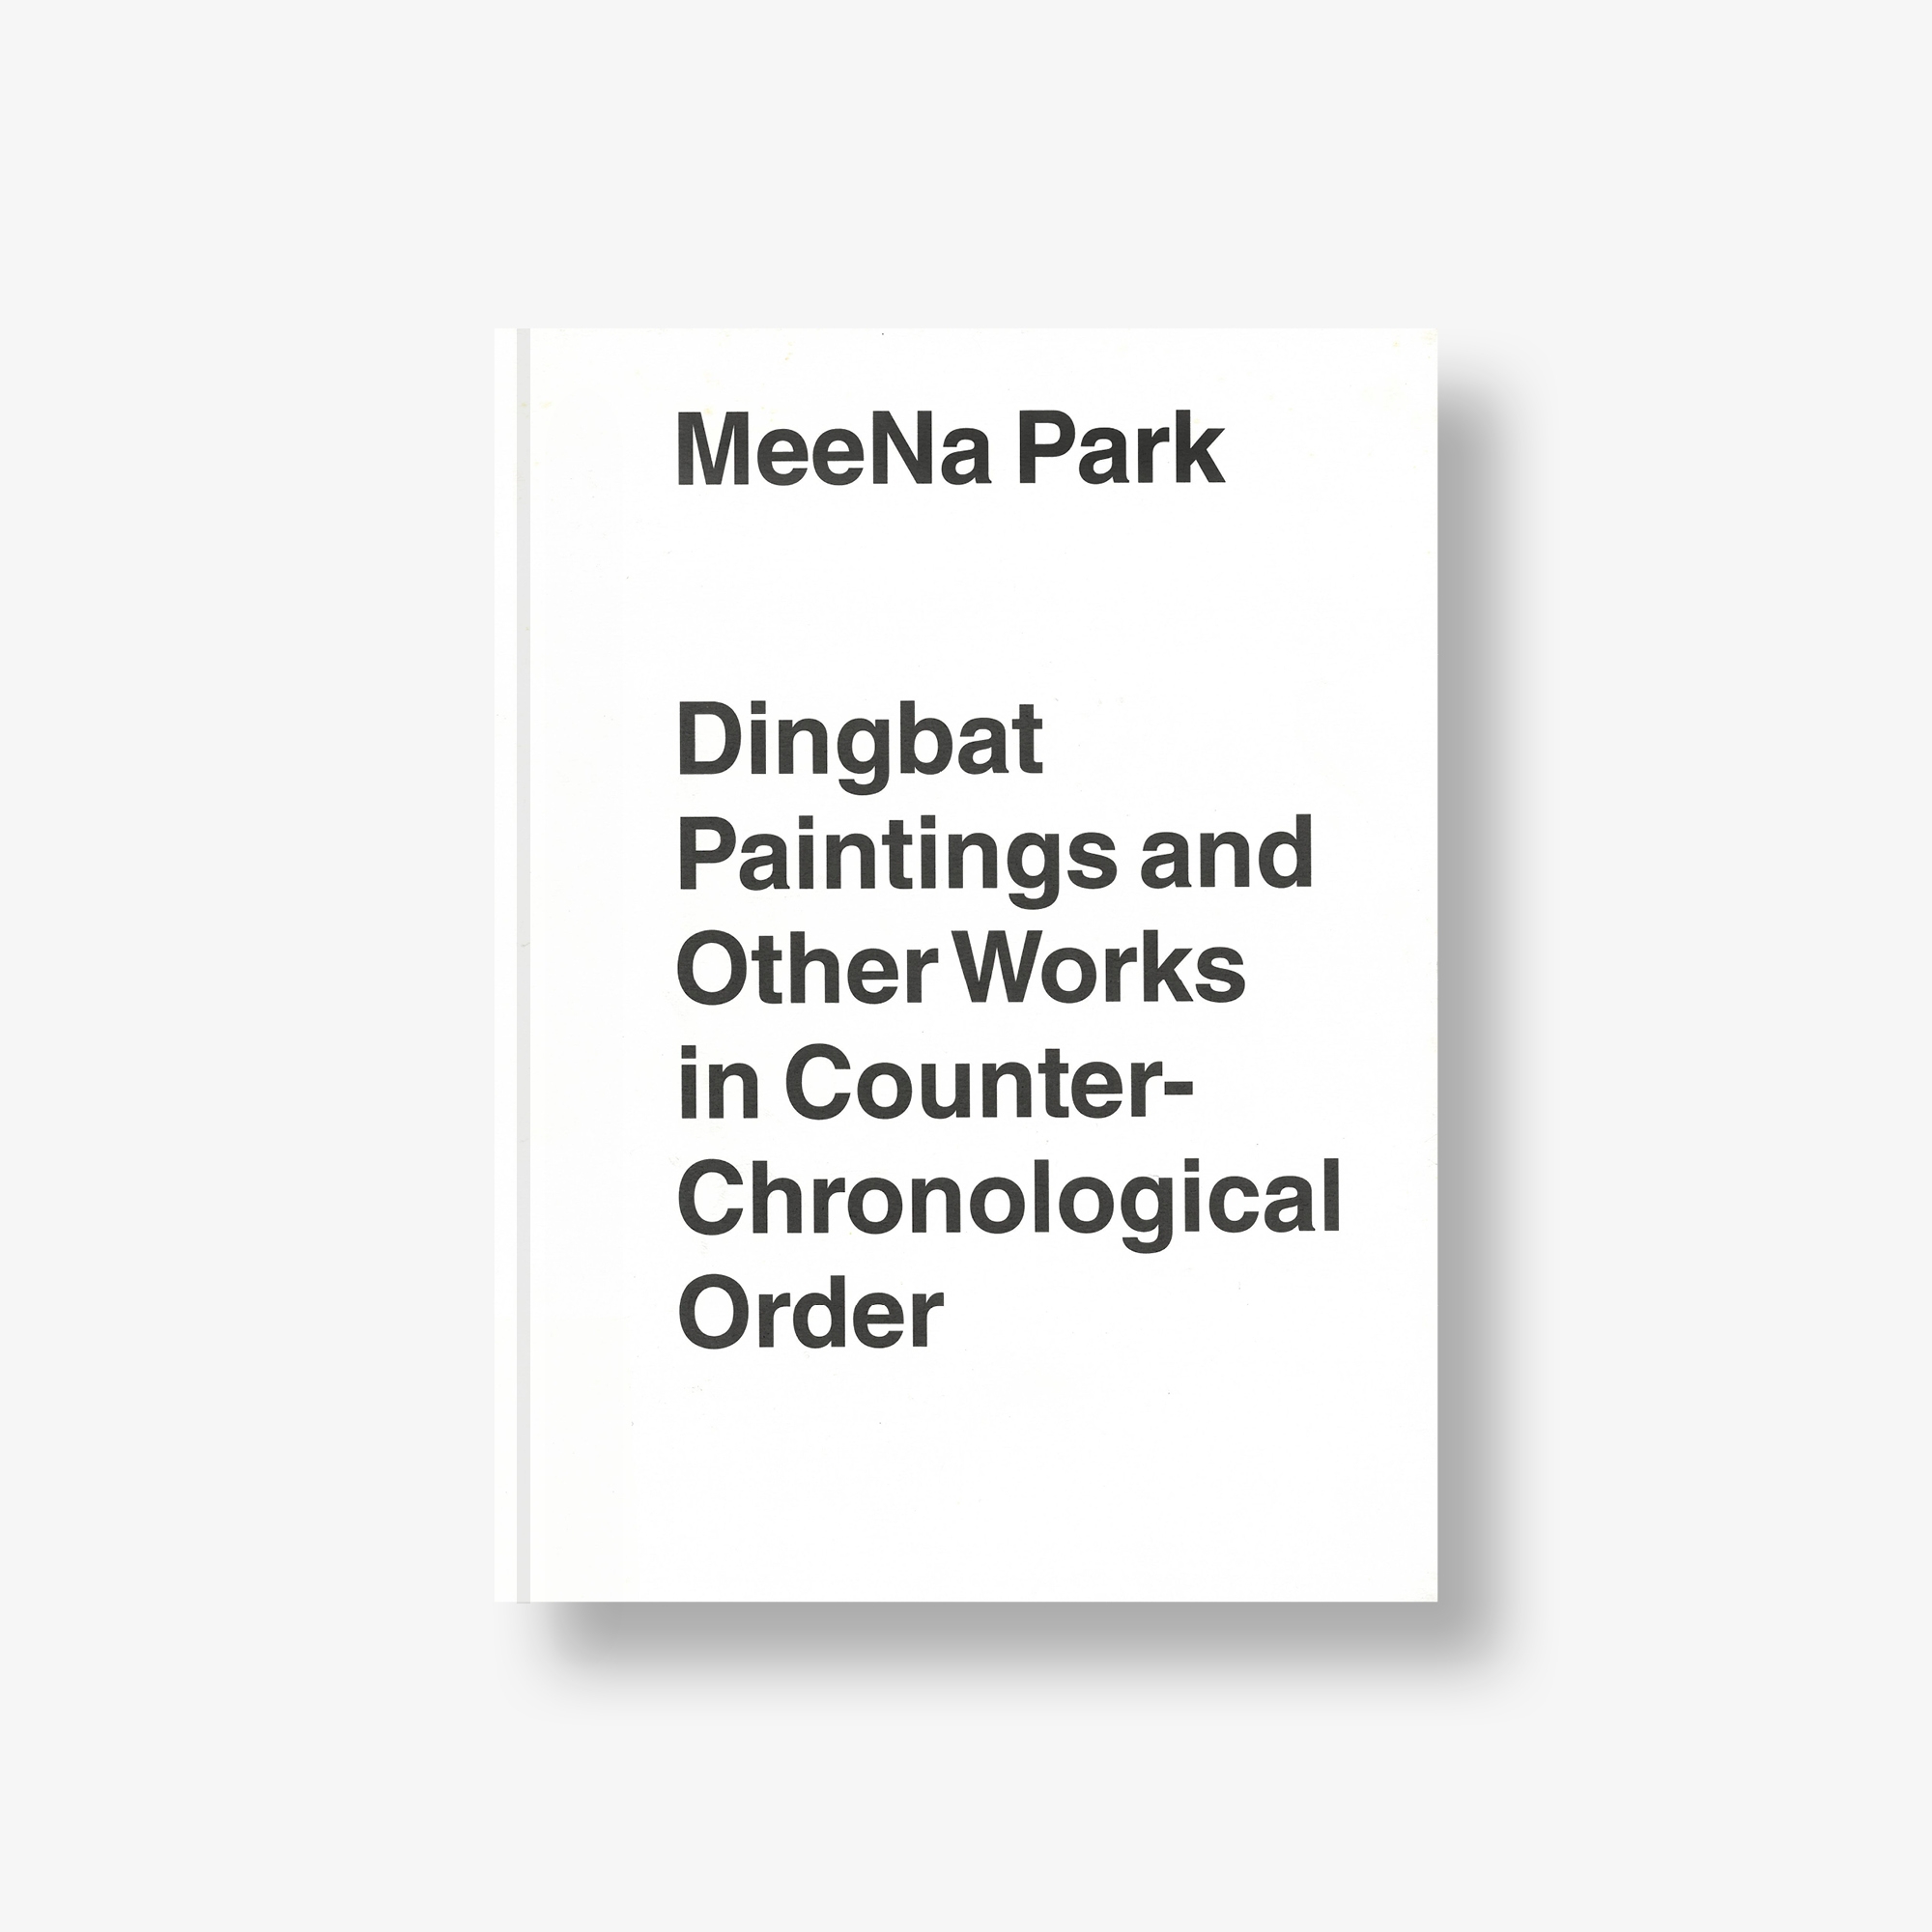 MeeNa Park